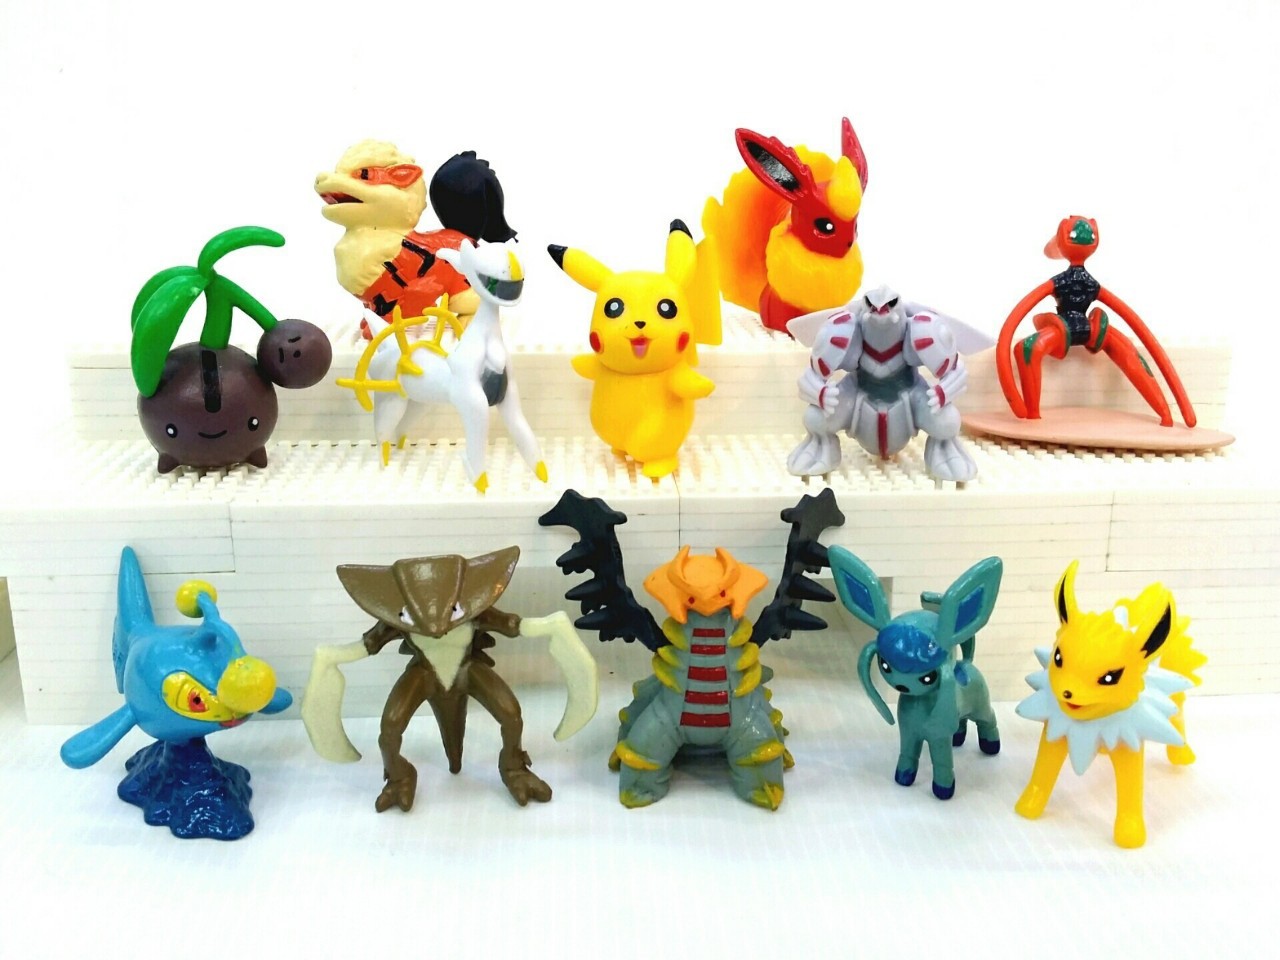 4 cm Action Figure Pocket Monster Pokemon Pikachu Set 12 pcs Model โมเดล แอ๊คชั่น ฟิกเกอร์ โปเกมอน